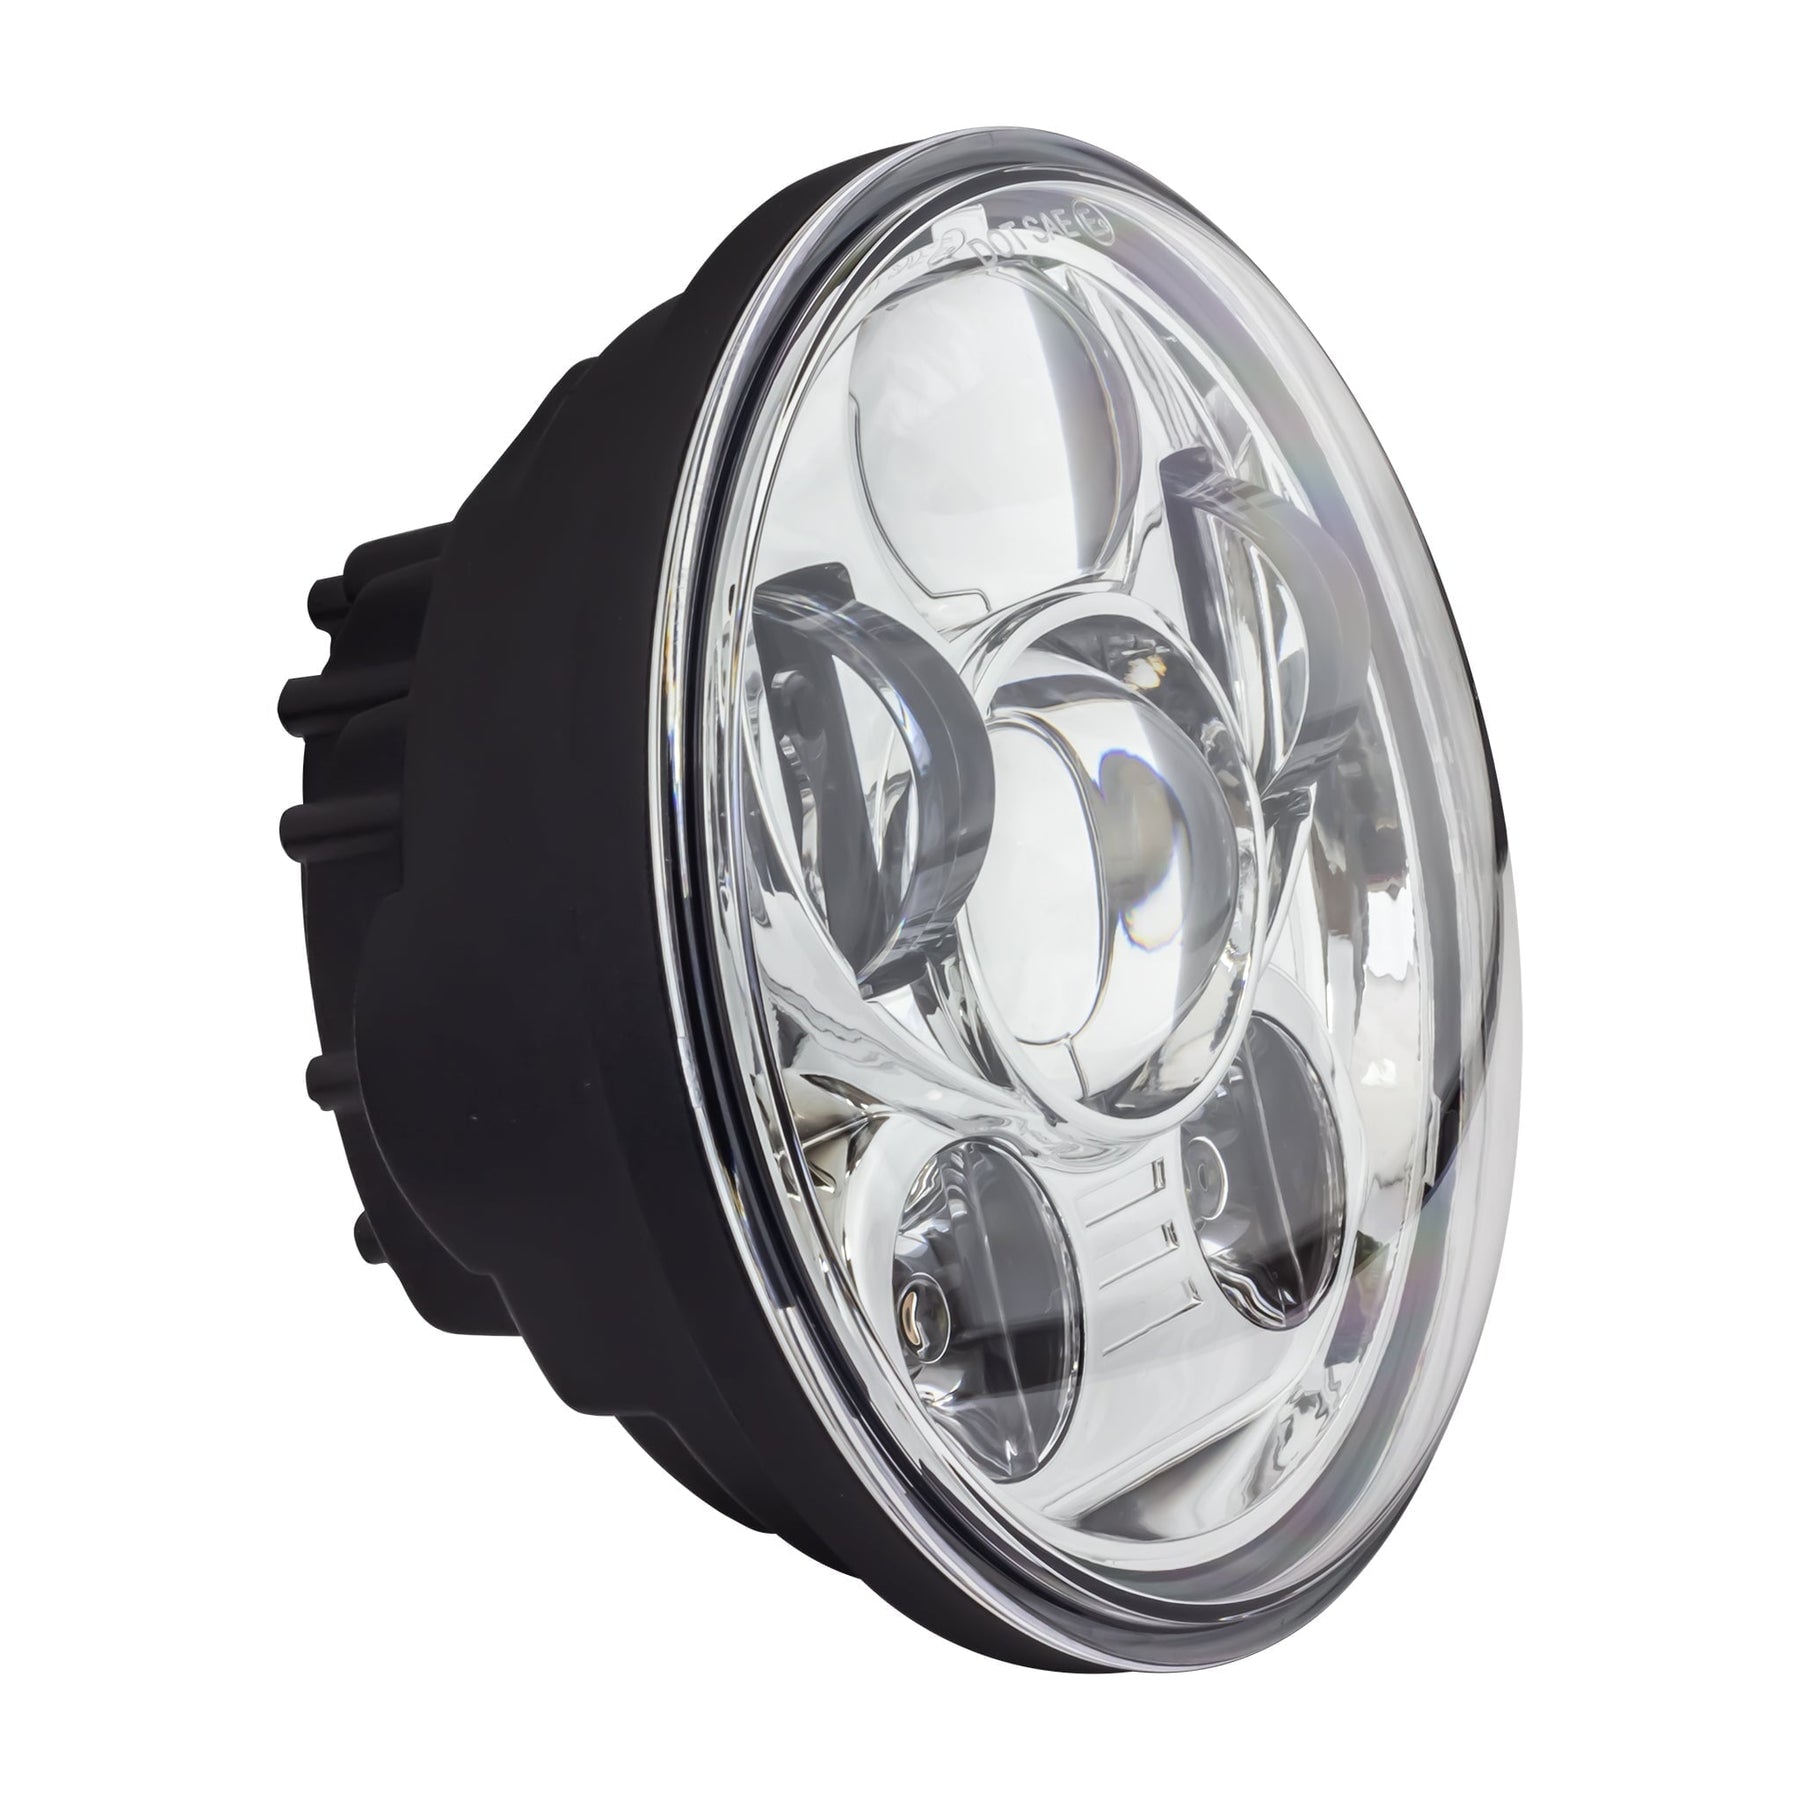 Eagle Lights 5 3/4" Generation III LED Headlight Kit for Harley Davidson Low Rider ST Models with Adapter Bracket